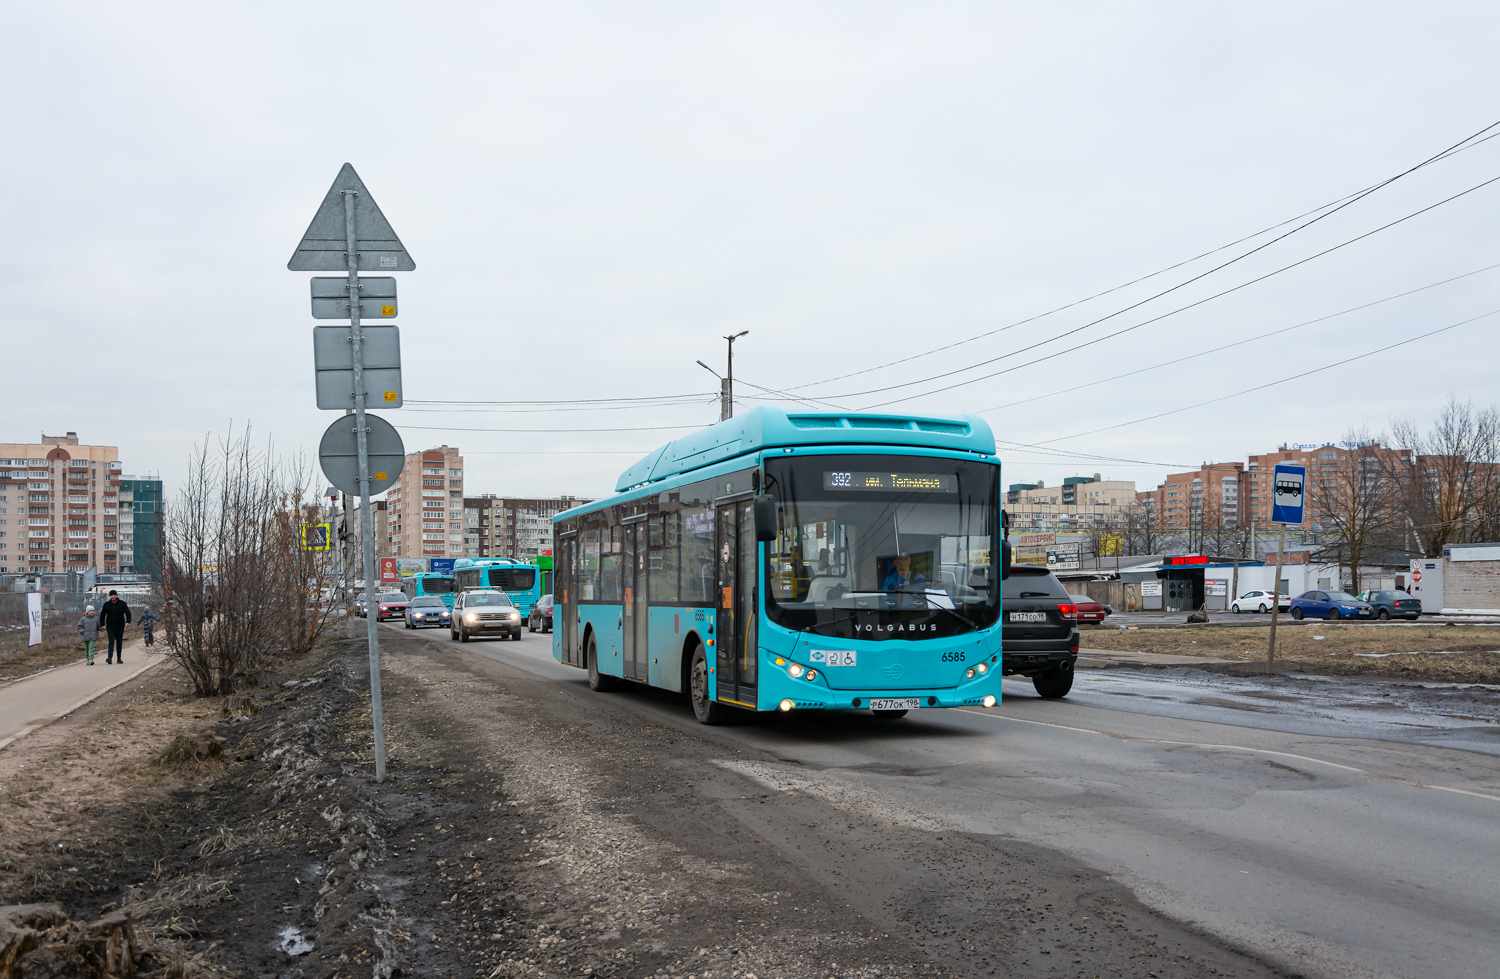 Saint Petersburg, Volgabus-5270.G4 (CNG) No. 6585